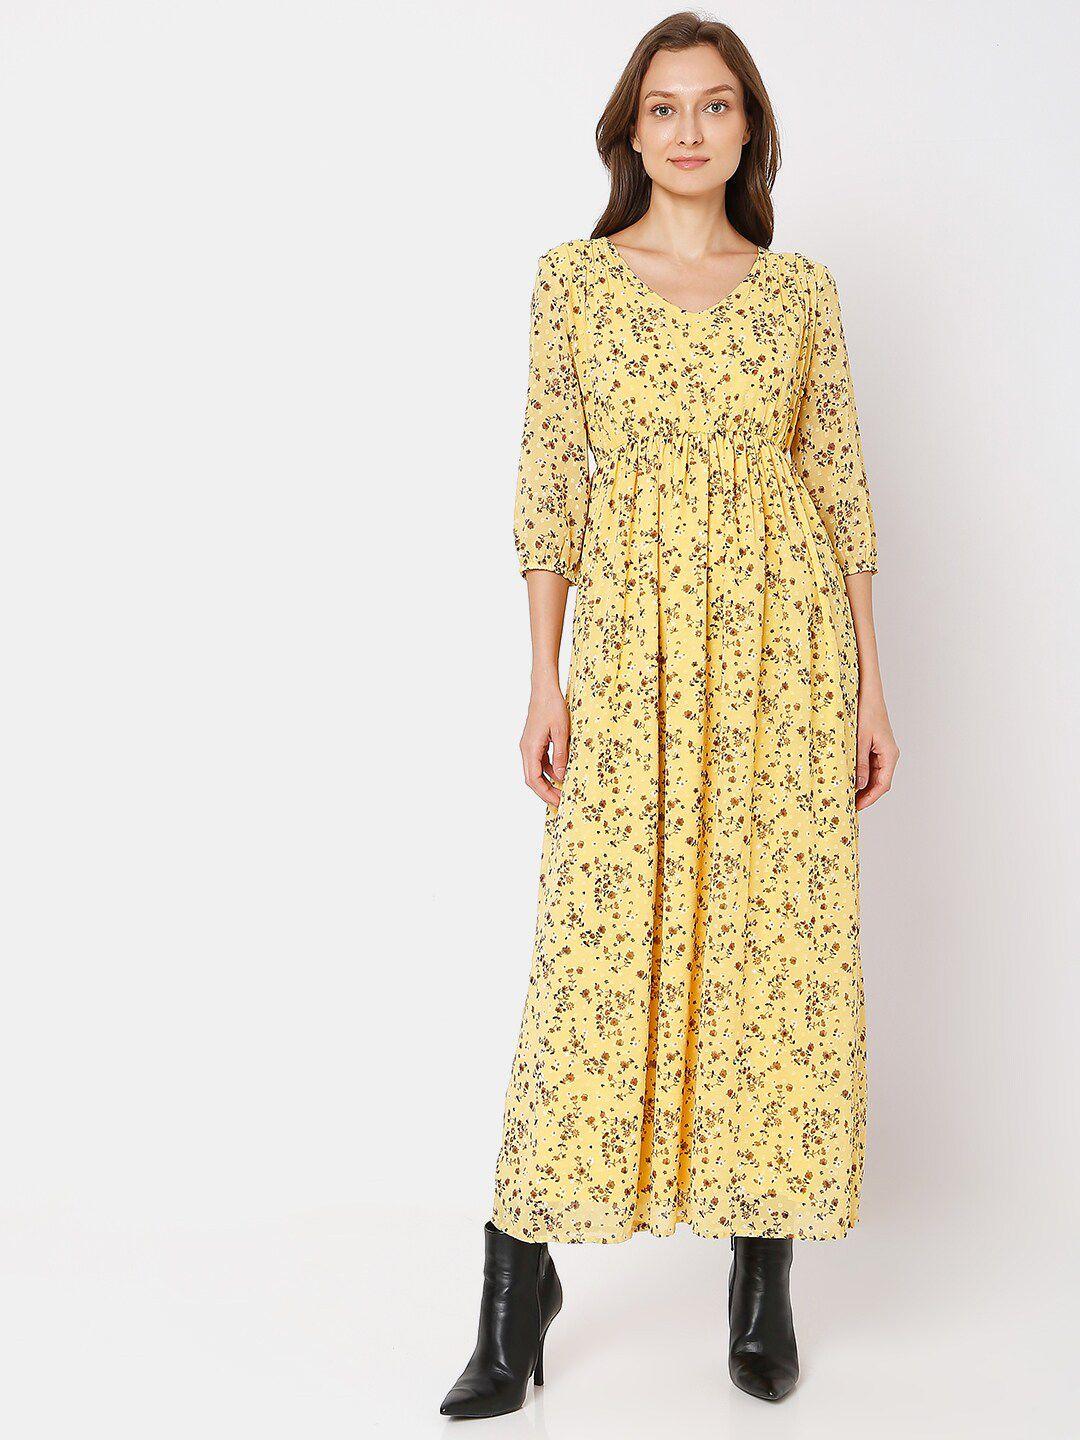 vero moda yellow floral midi dress